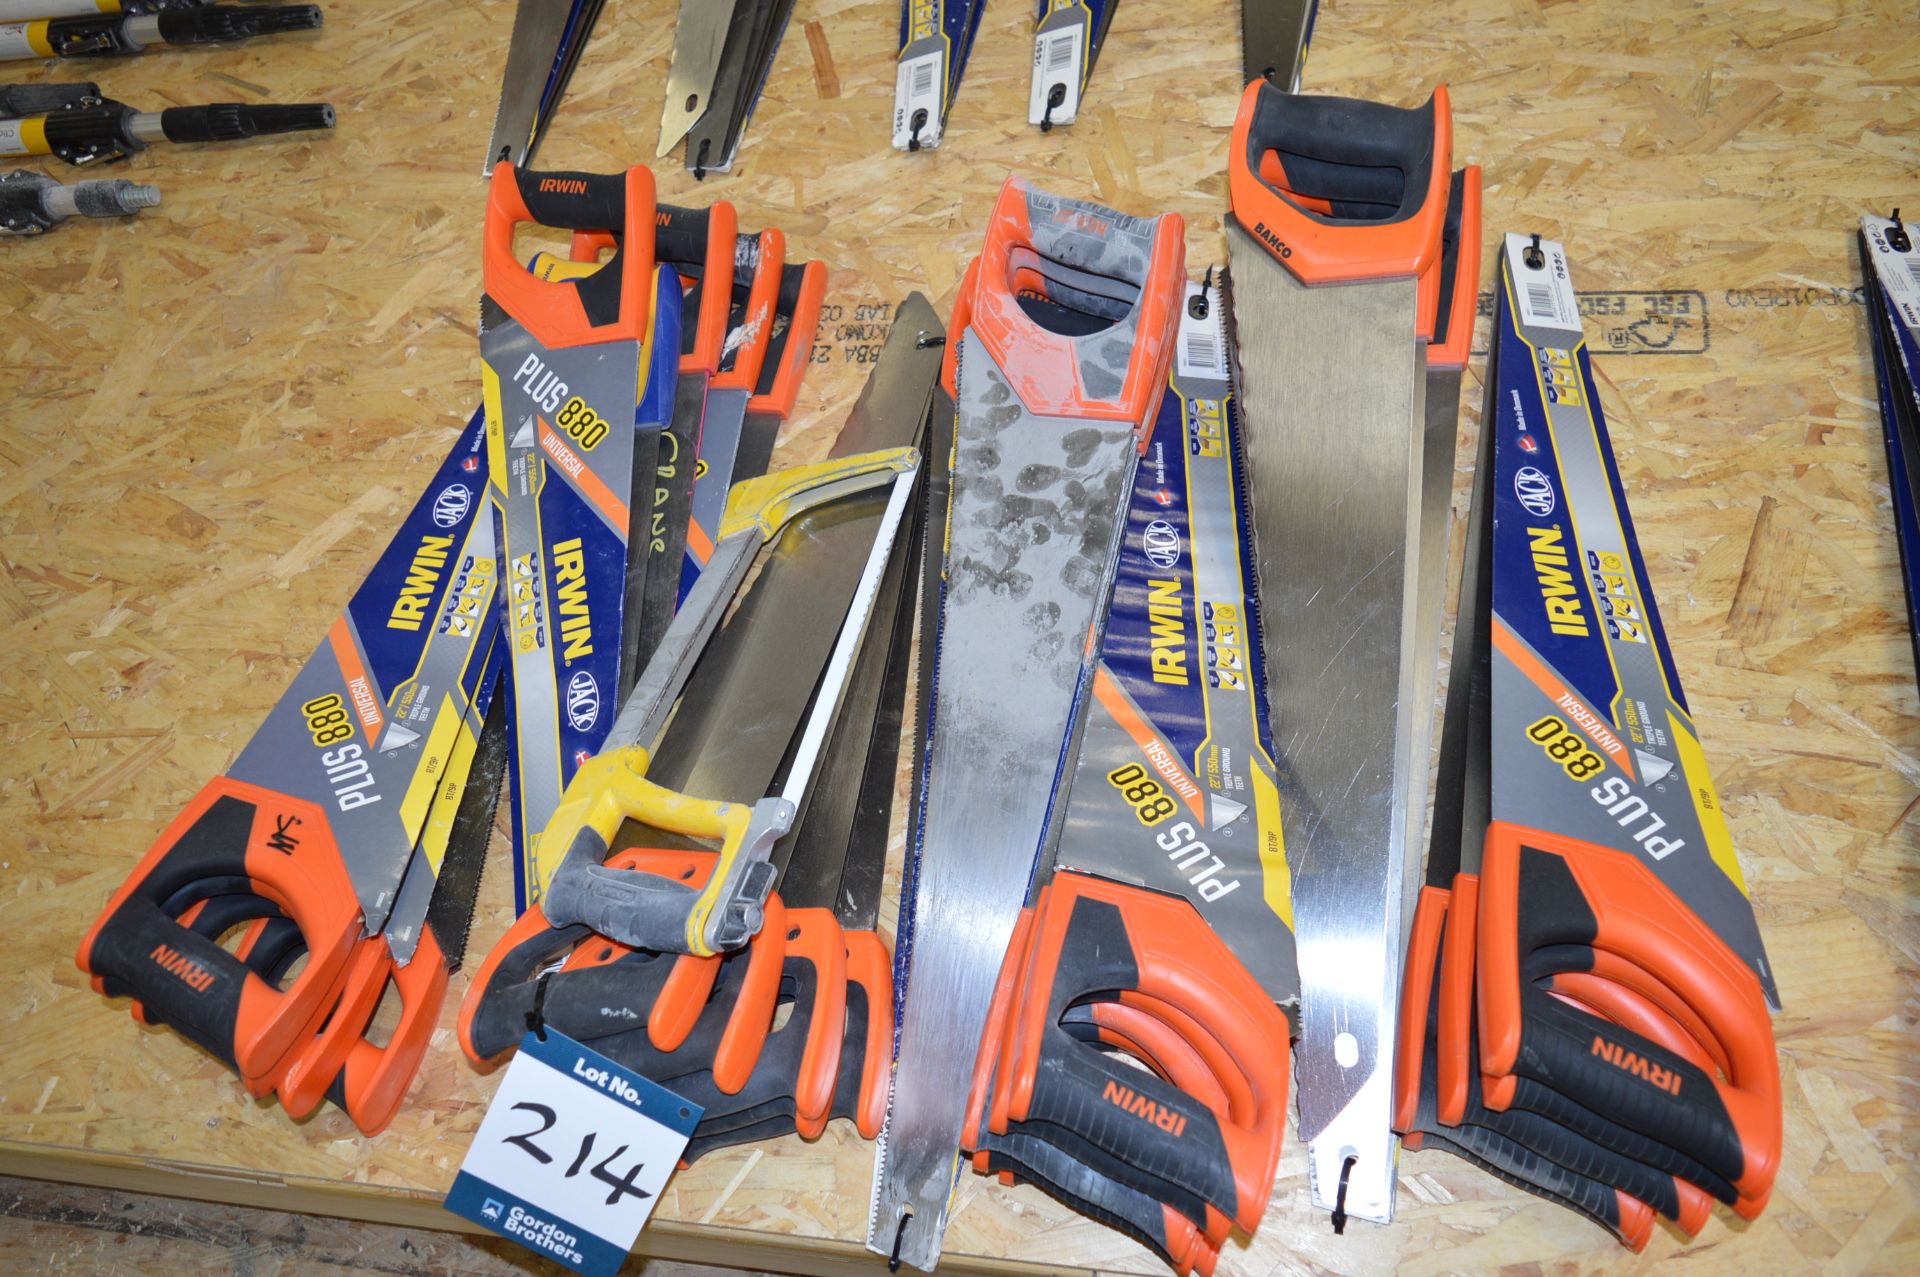 Quantity of various saws